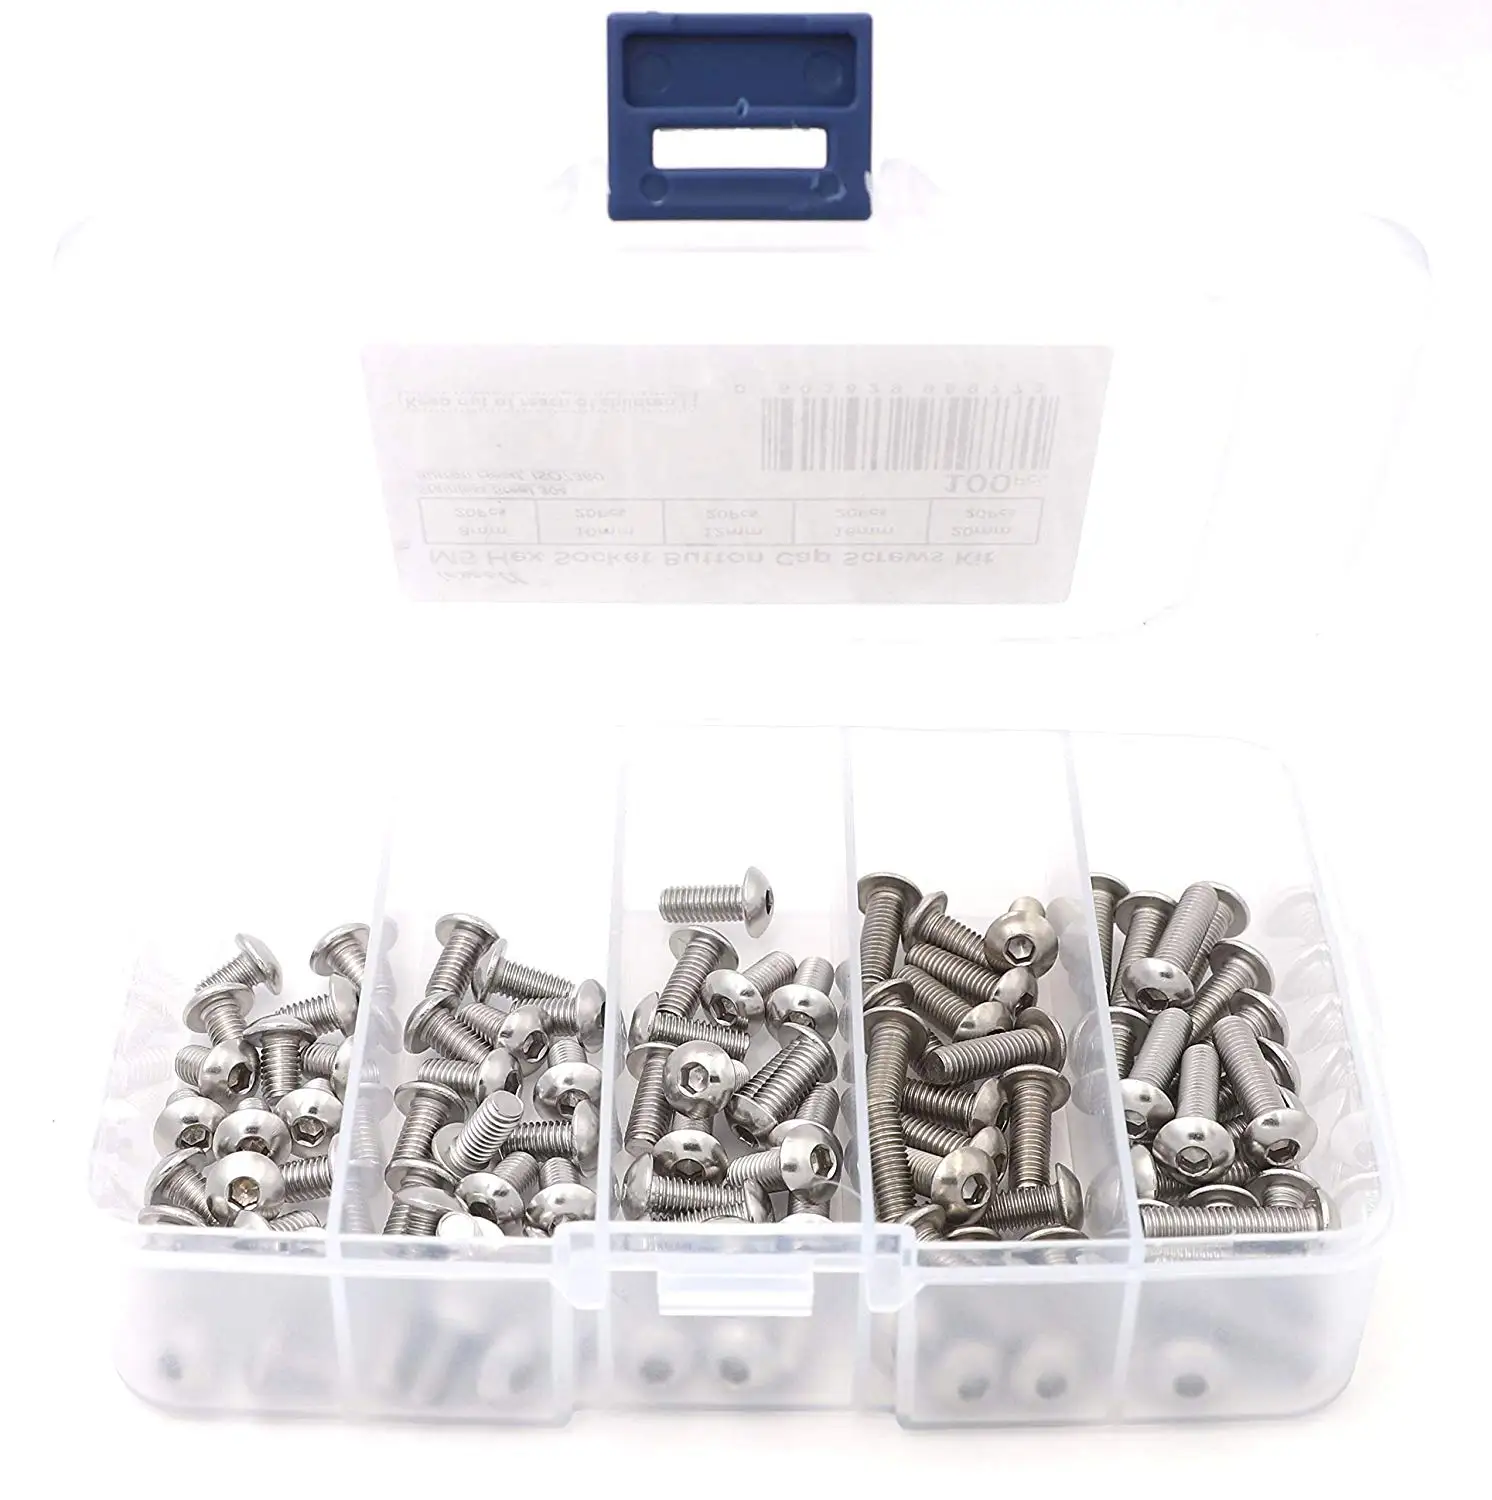 TOPINSTOCK Metric Thread M5 x 0.8mm Stainless Steel Nylon Insert Hex Lock Nuts Pack of 100